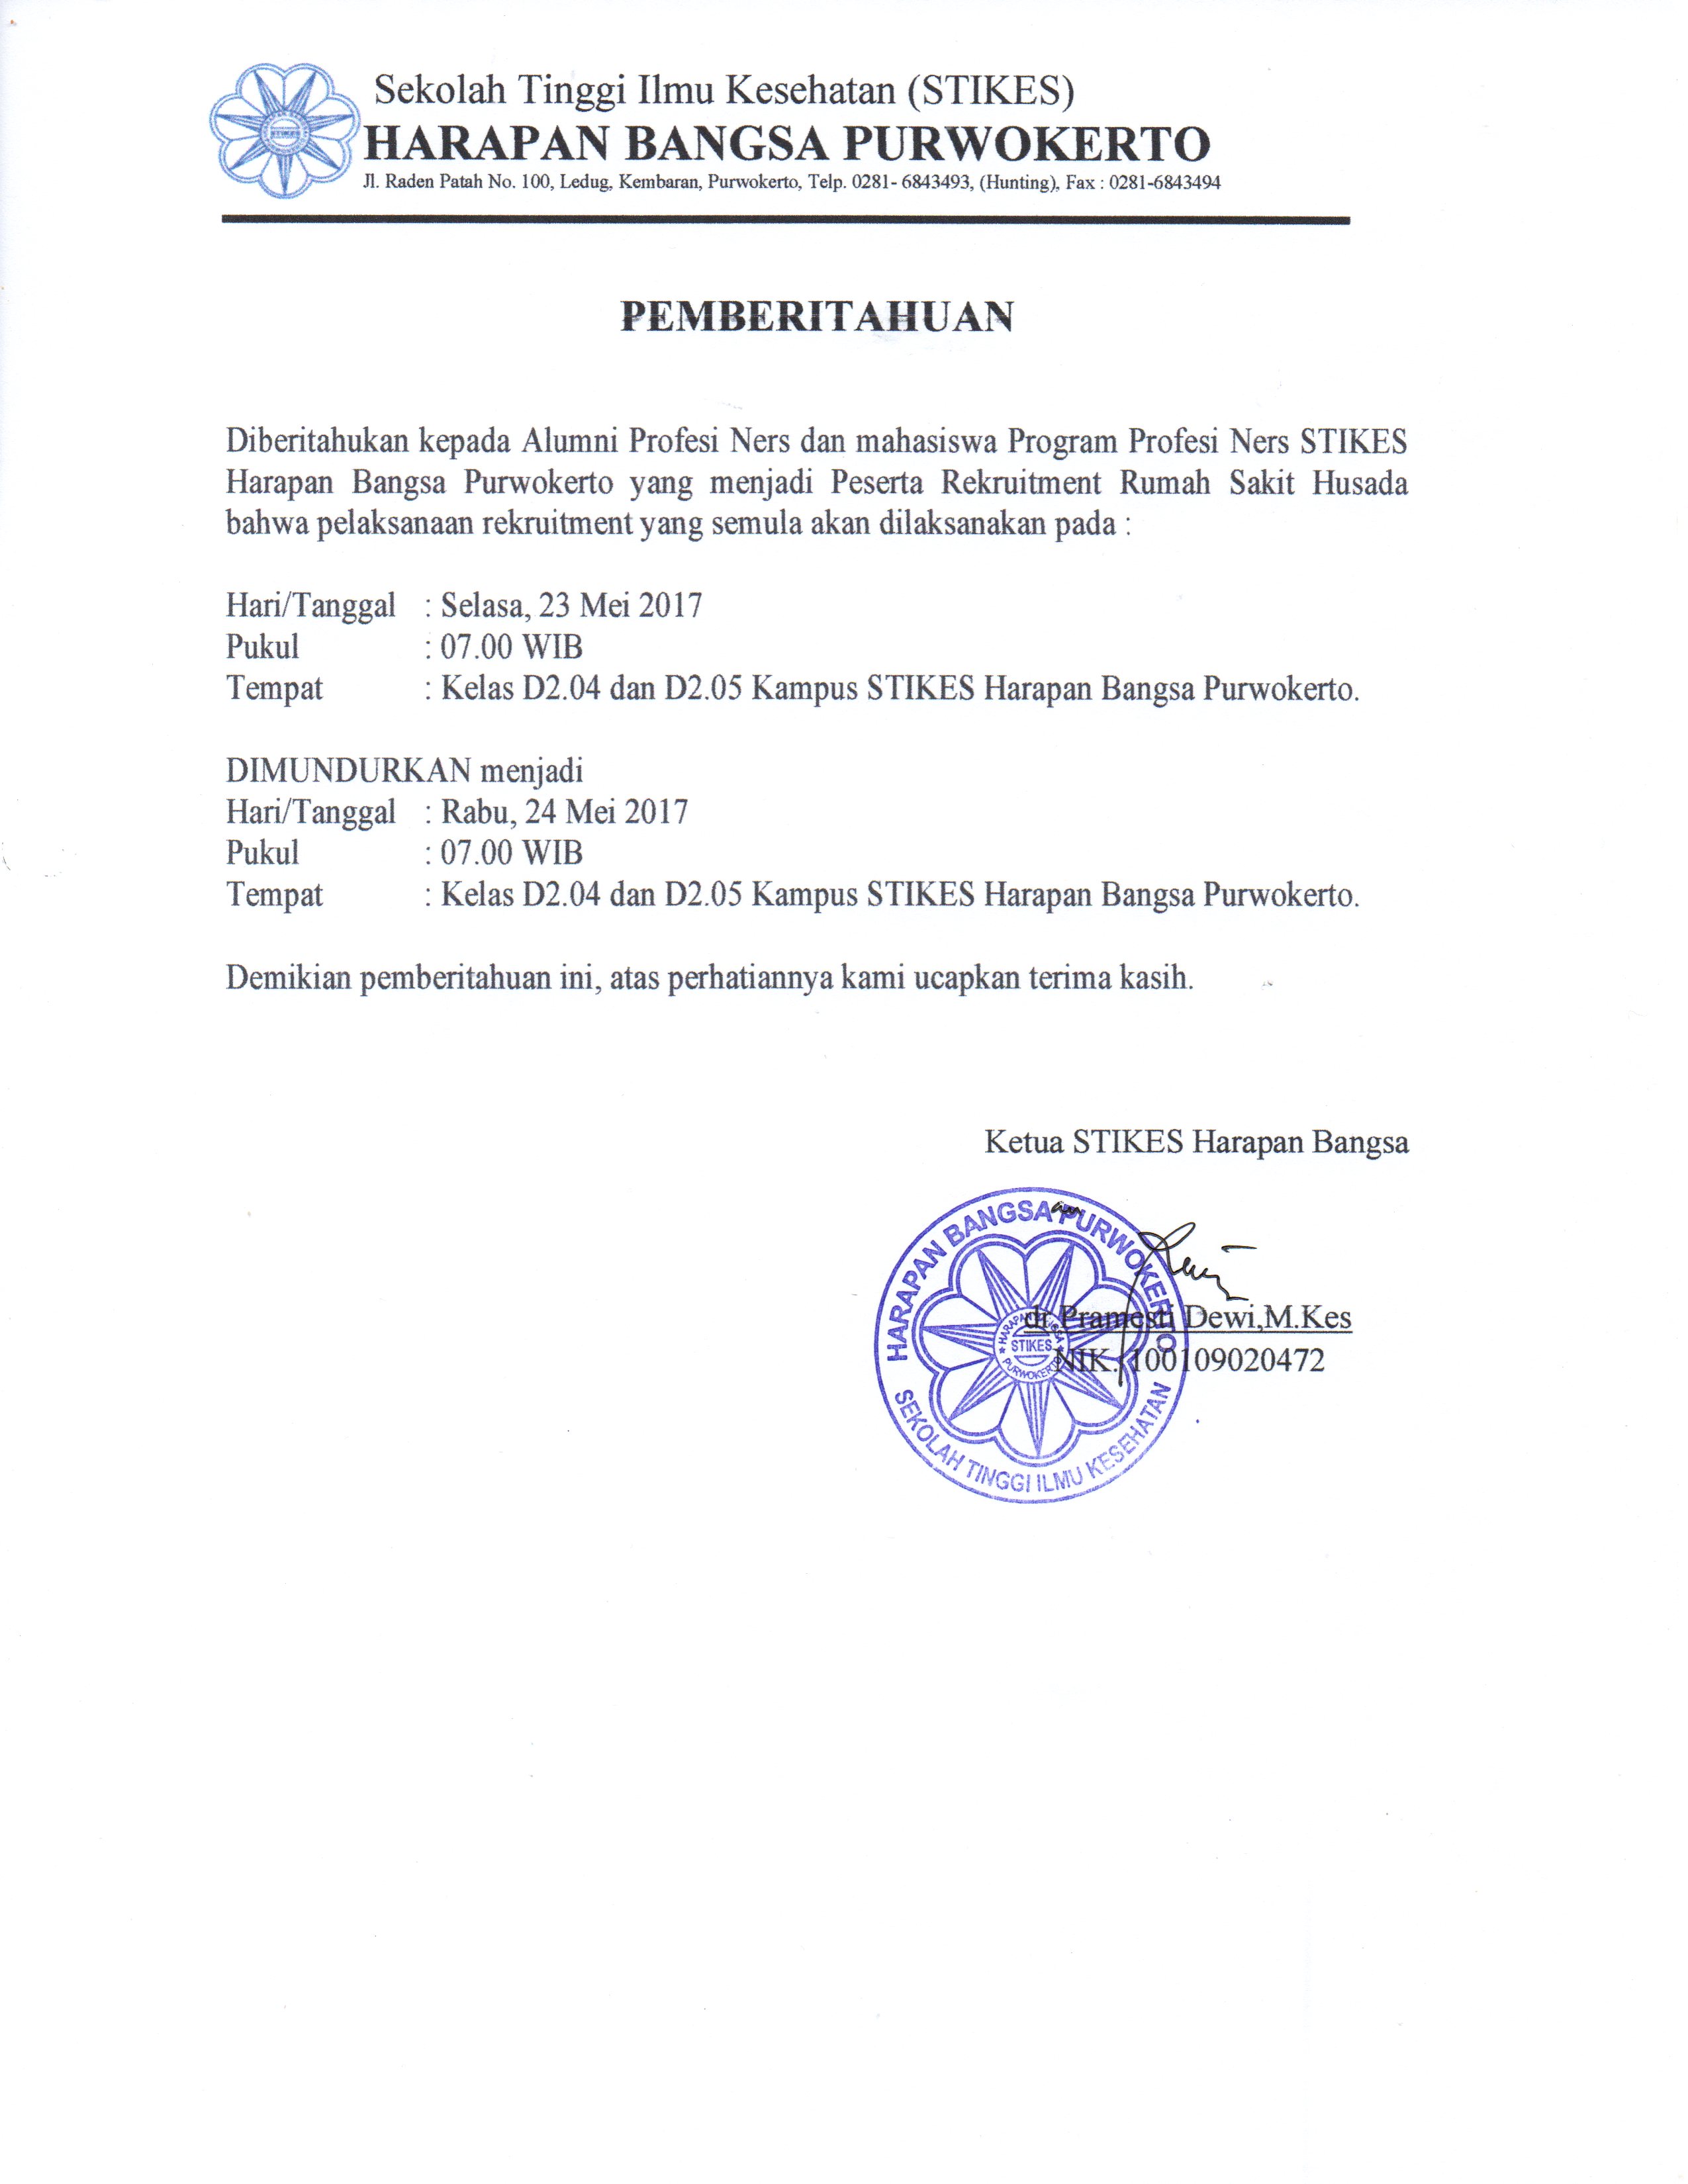 Pemberitahuan Perubahan Jadwal Rekruitment Rumah Sakit Husada Jakarta